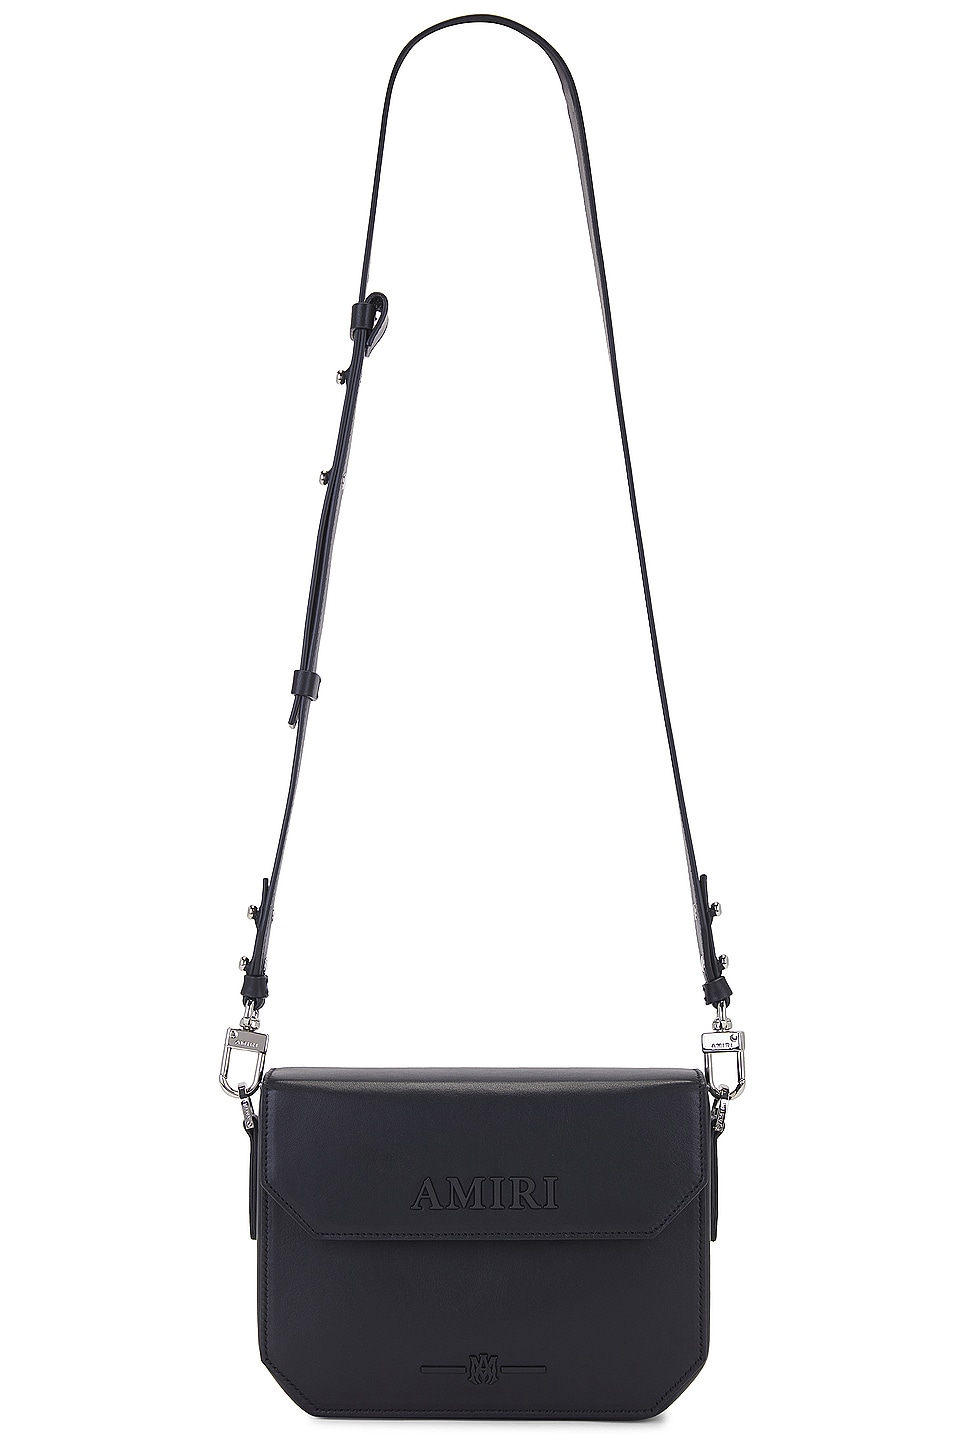 Amiri Nappa Leather Flap Crossbody Bag in Black